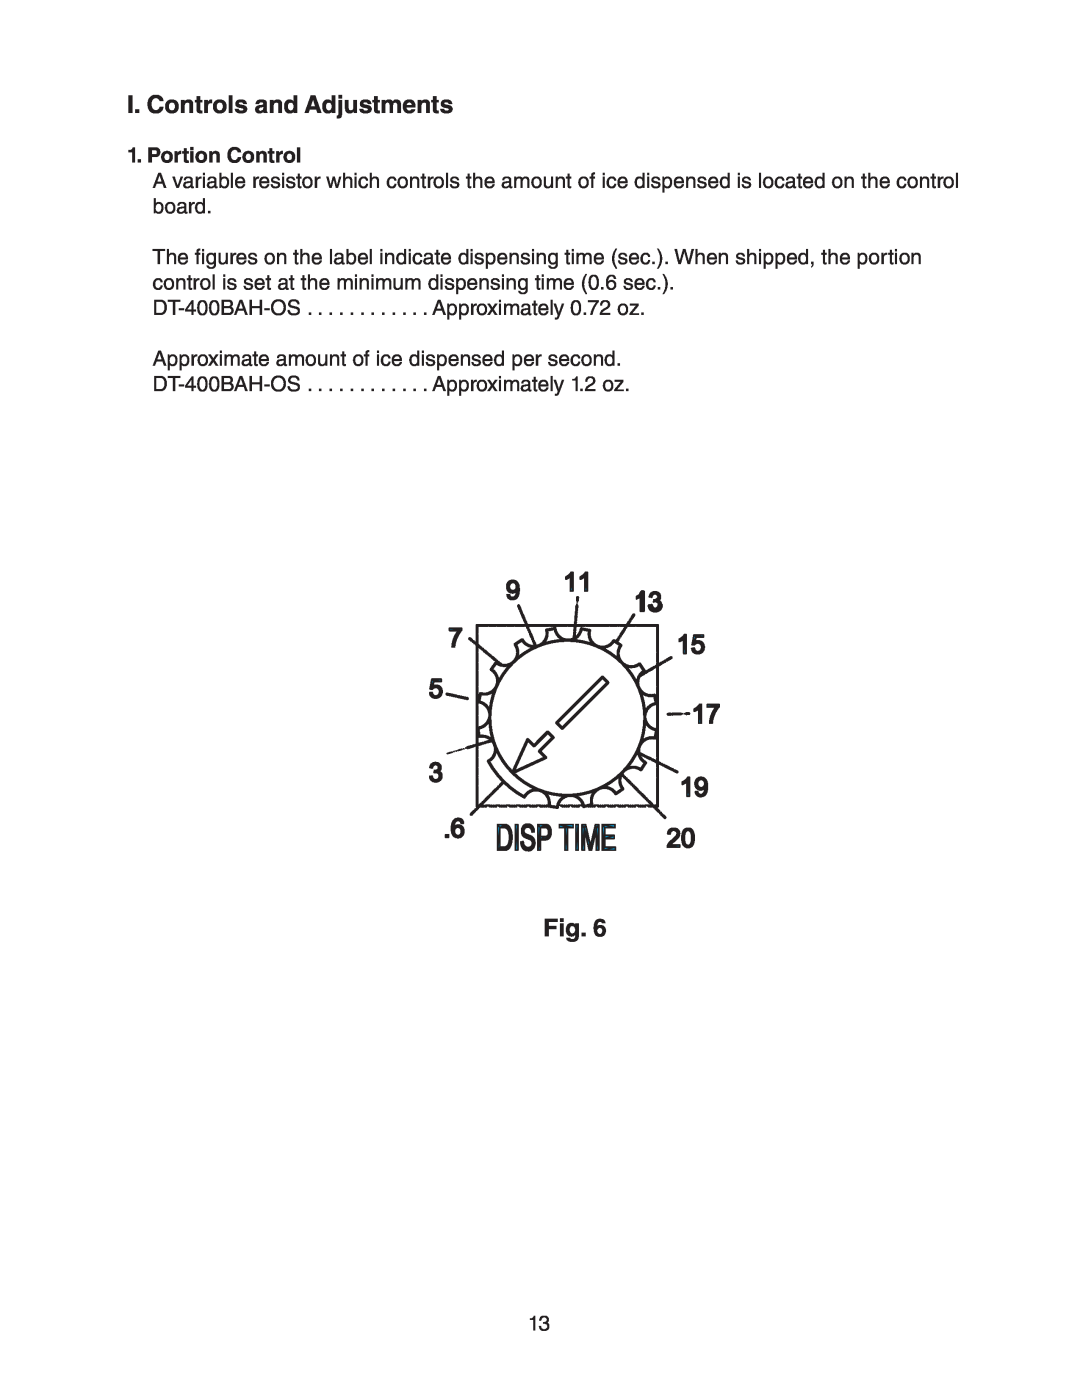 Hoshizaki DT-400BAH-OS instruction manual I. Controls and Adjustments, Portion Control 